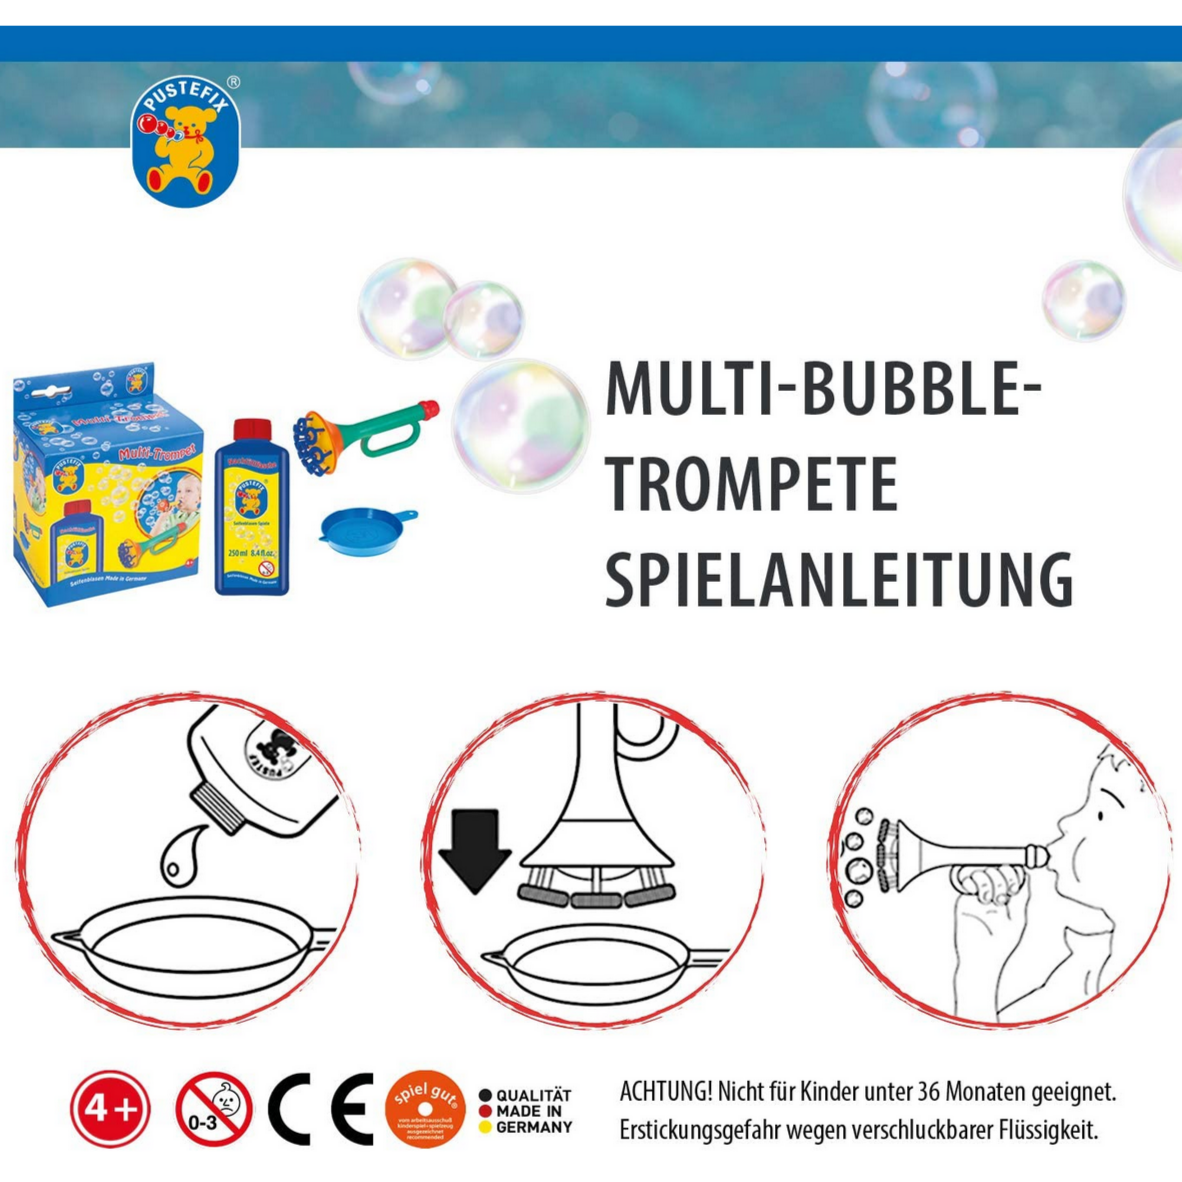 instructions to pour bubbles into dish, dip trumpet and then blow bubbles